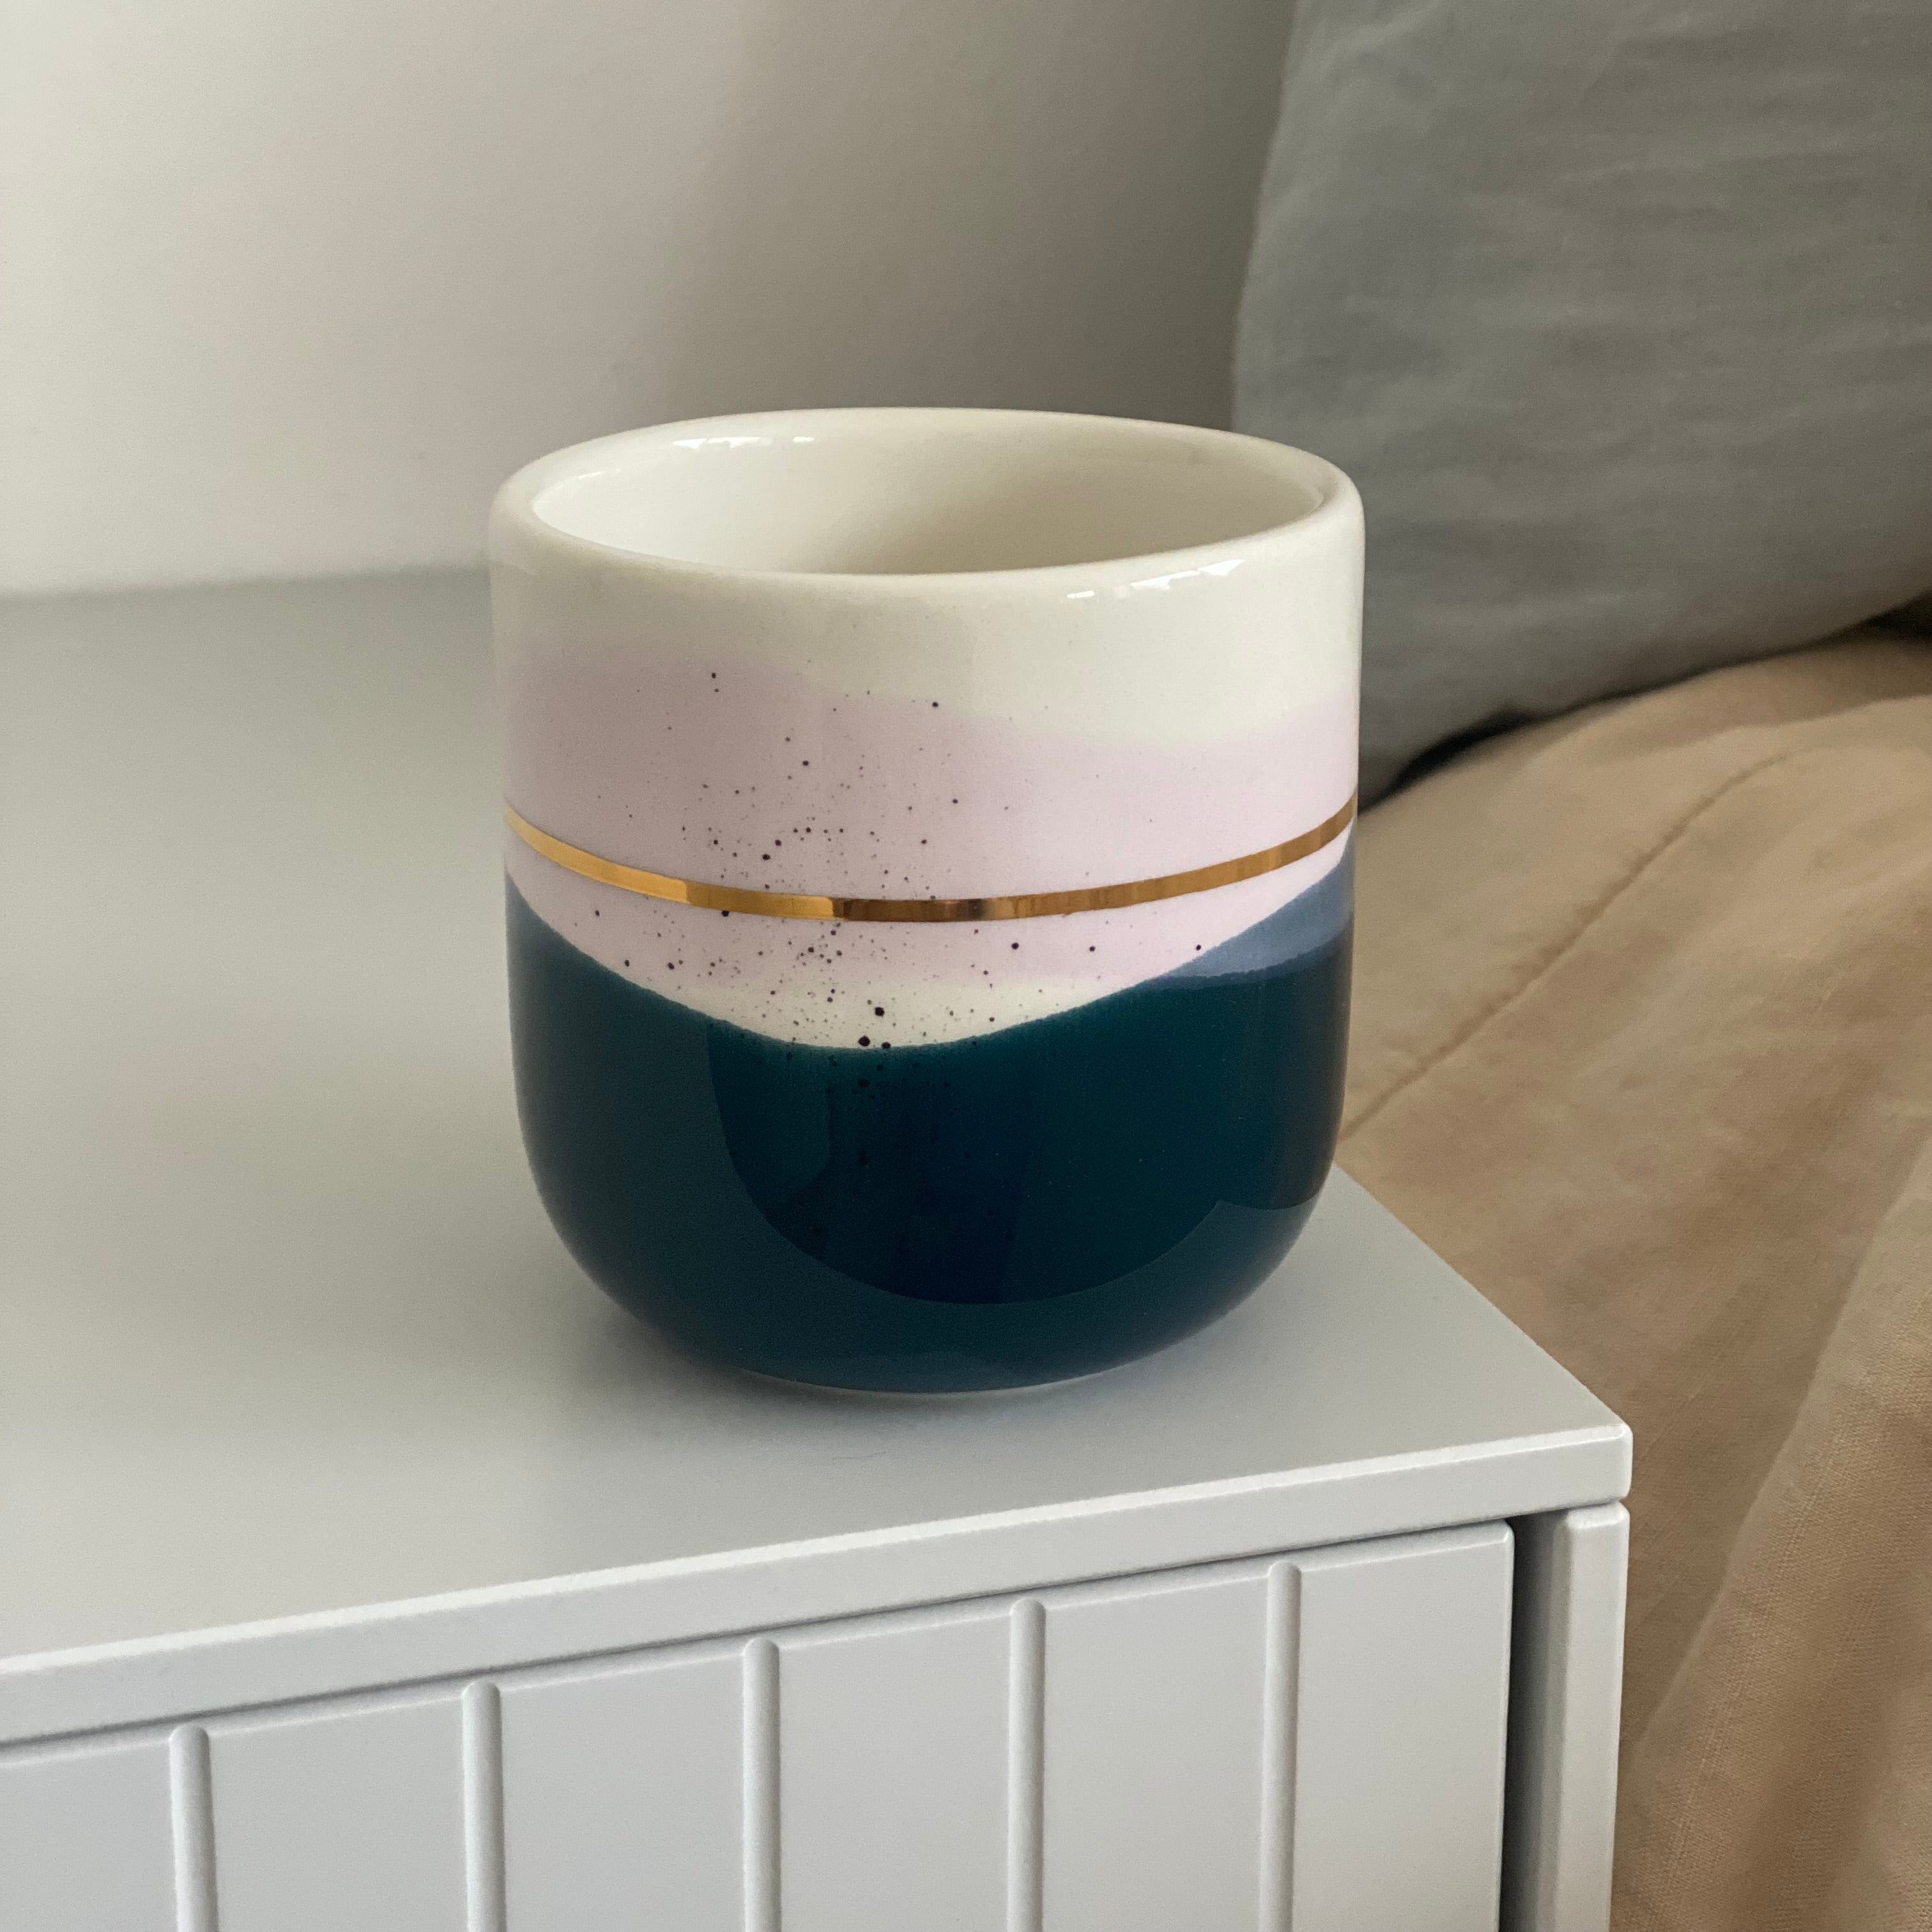 Marinski Heartmades latte kop Landscape - dark blue, light lilac